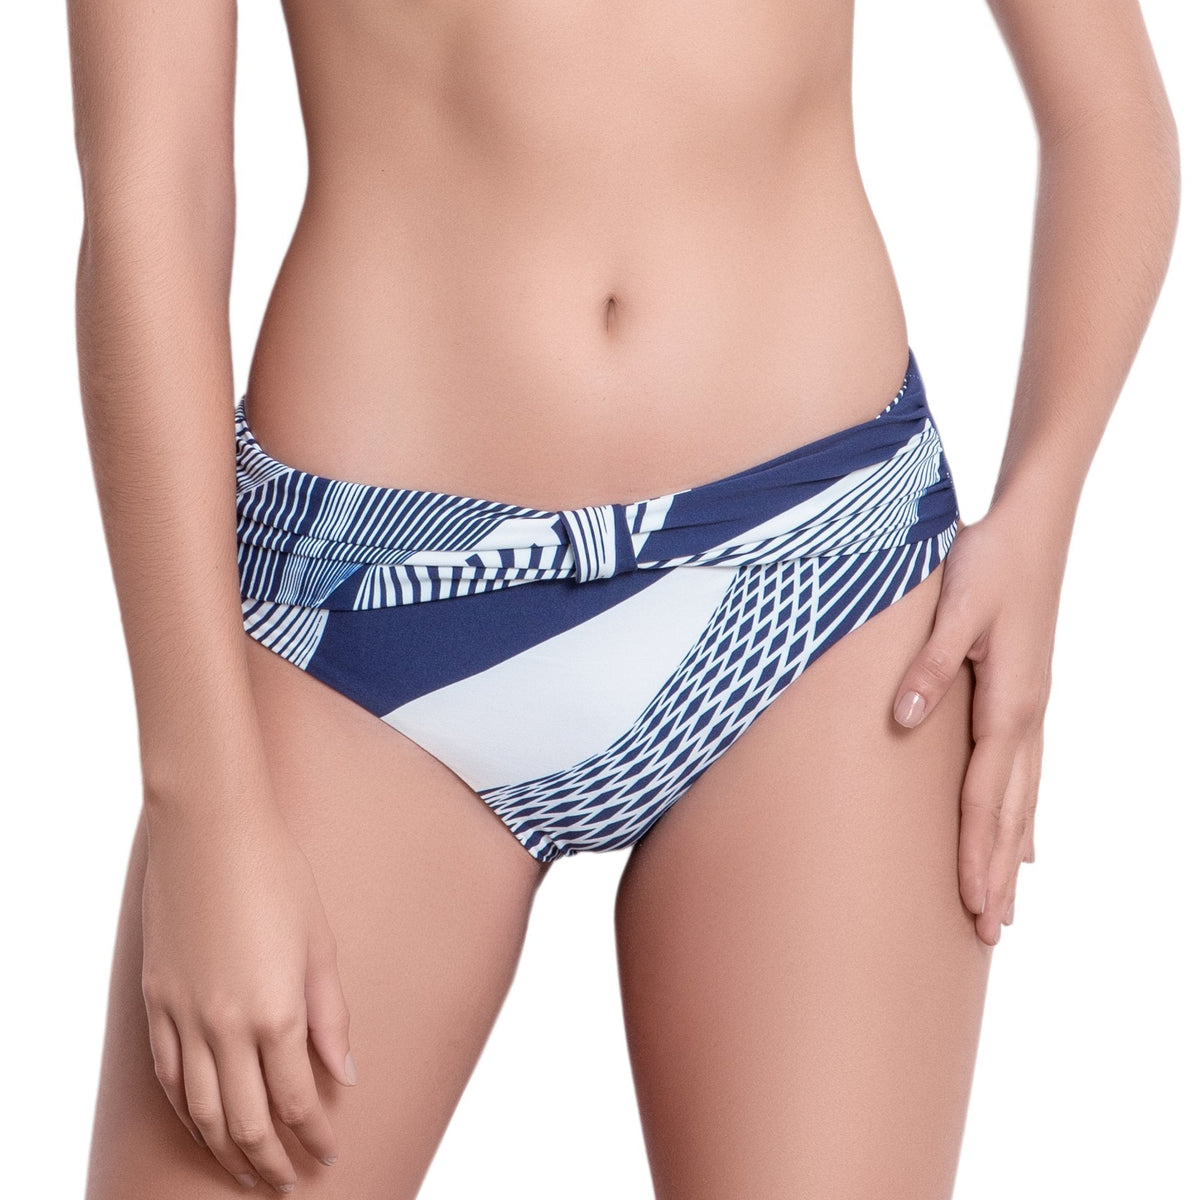 SOPHIE knotted belt panty, printed bikini bottom by ALMA swimwear  ‚Äì front view 2